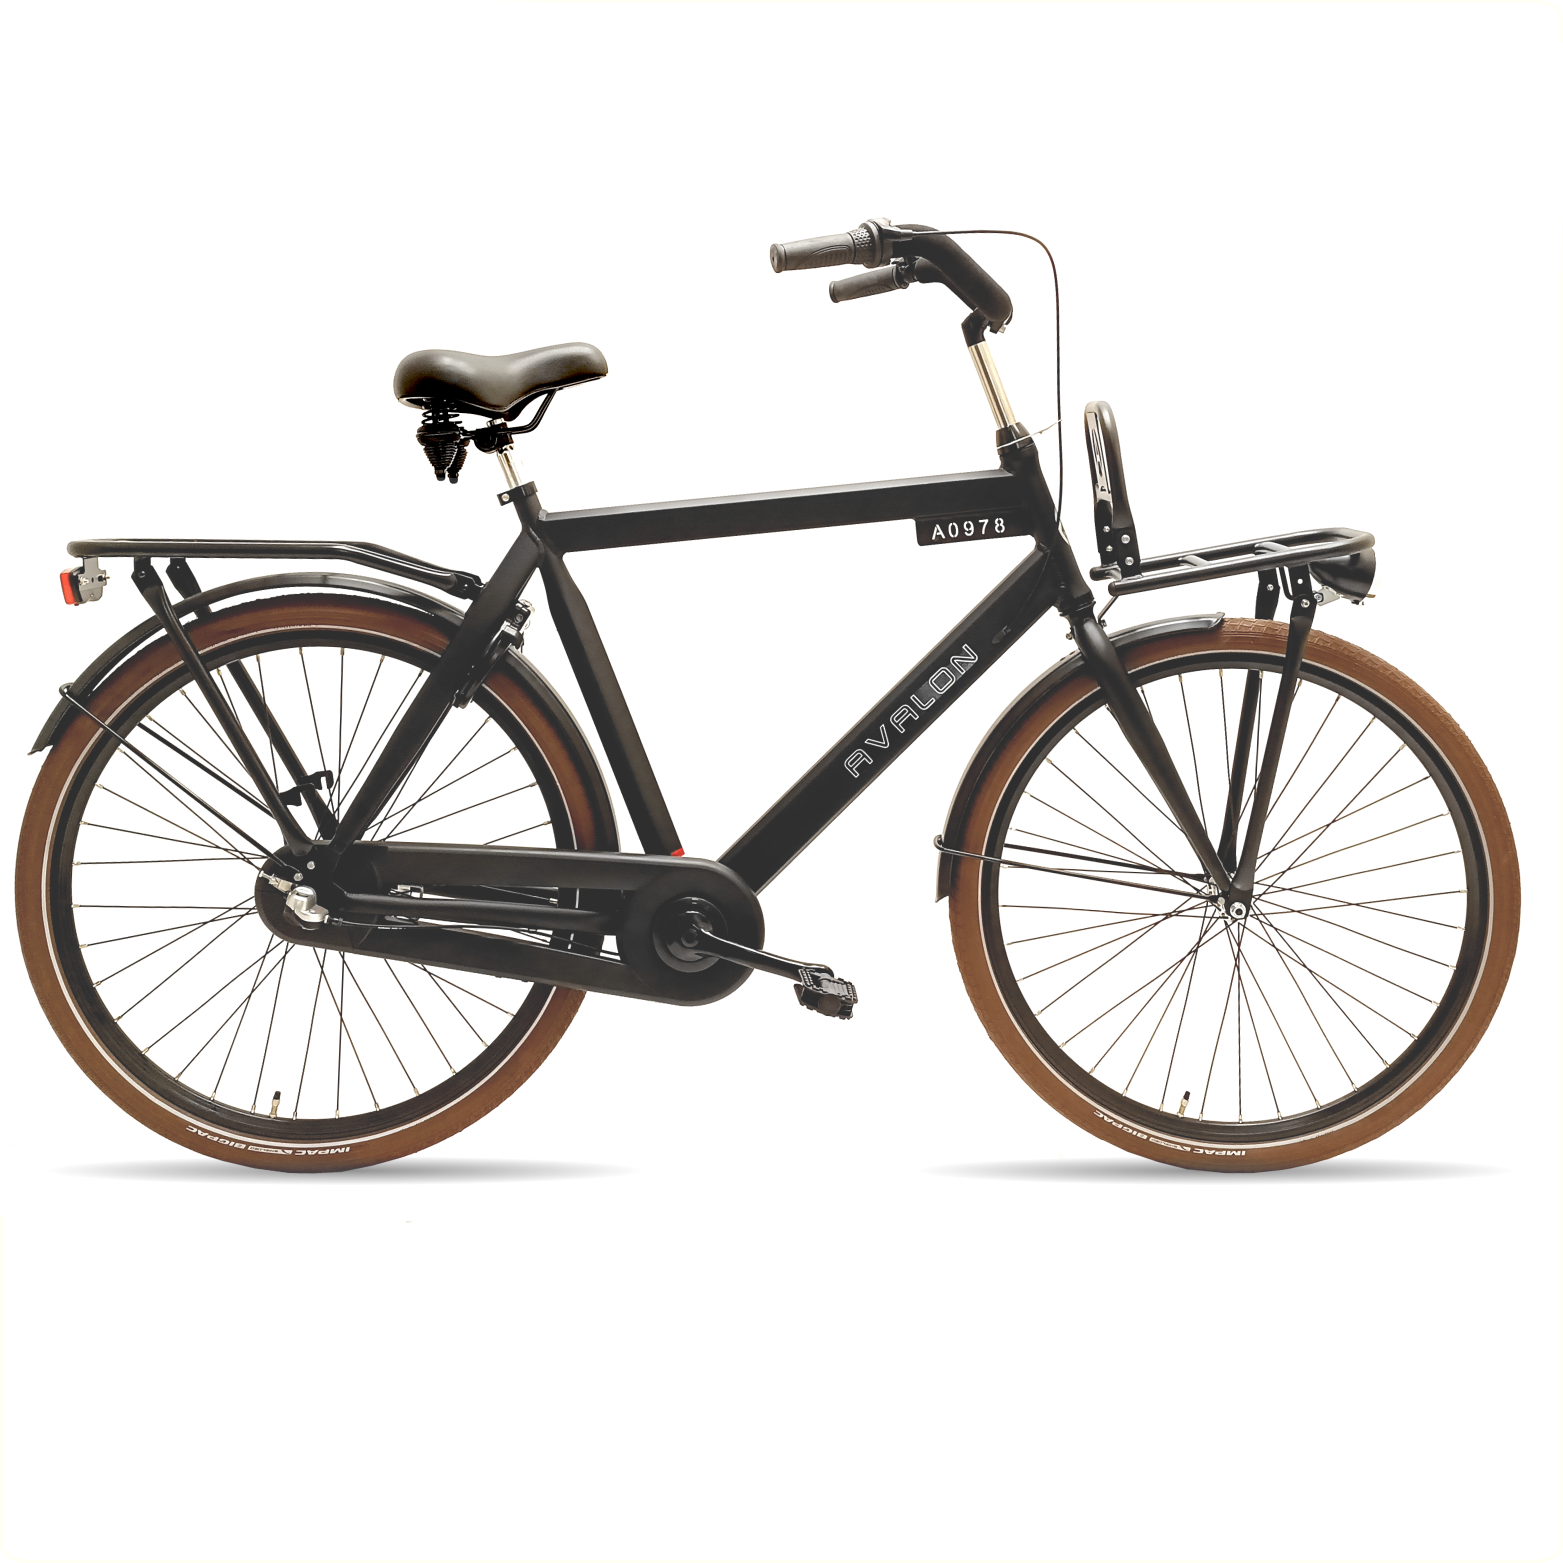 AVALON - Cycletech groothandel in fietsen en onderdelen